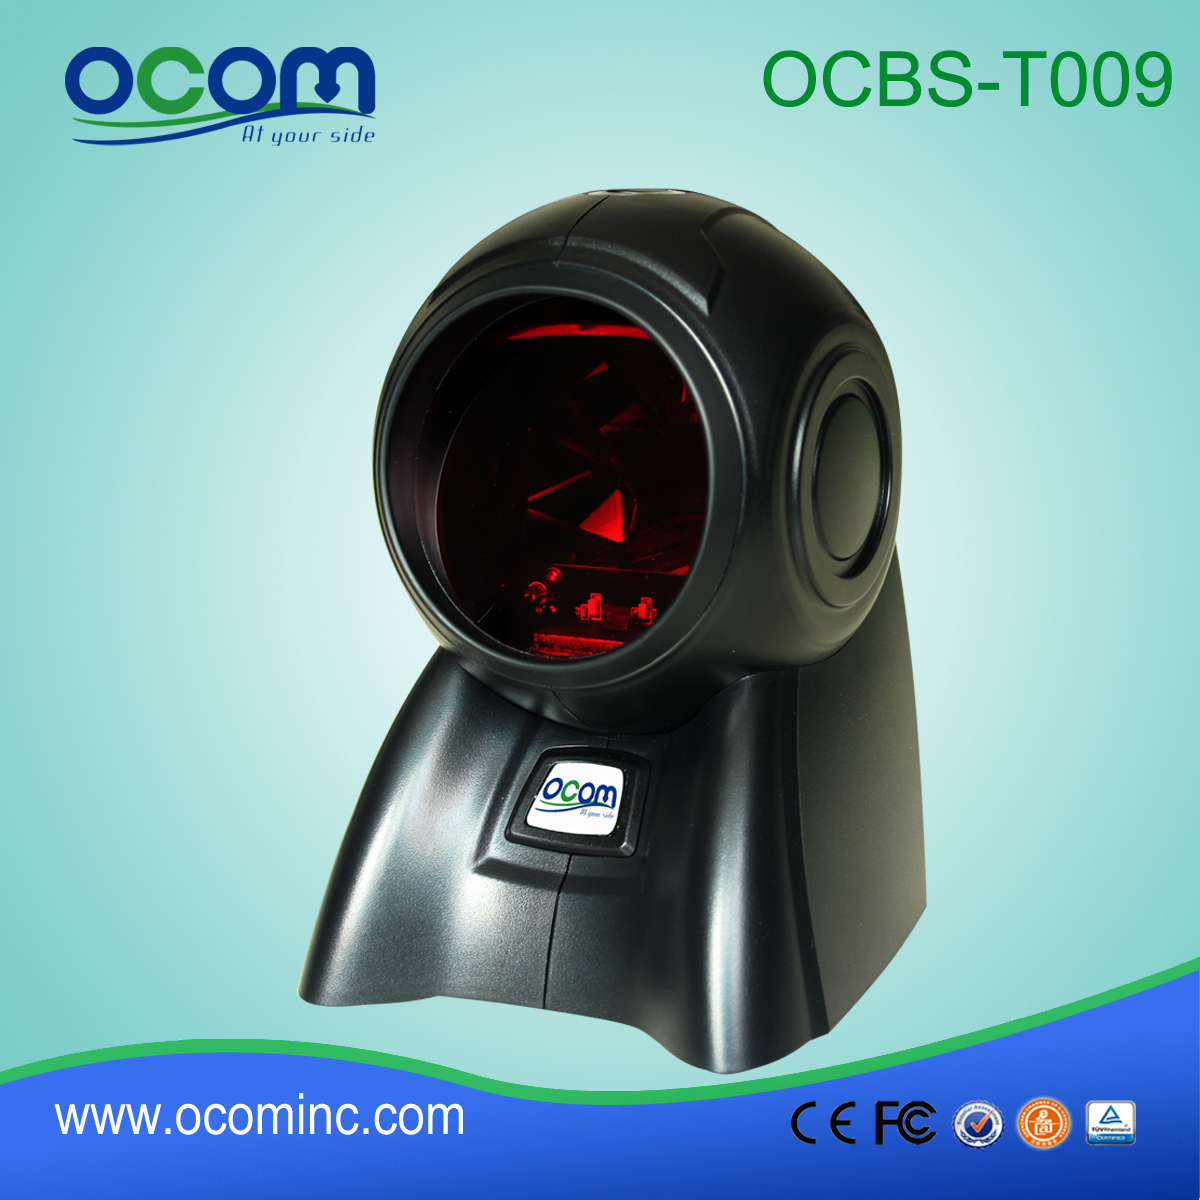 OCBs-T009 Omni-directional Laser Scanner POS στο γραφείο